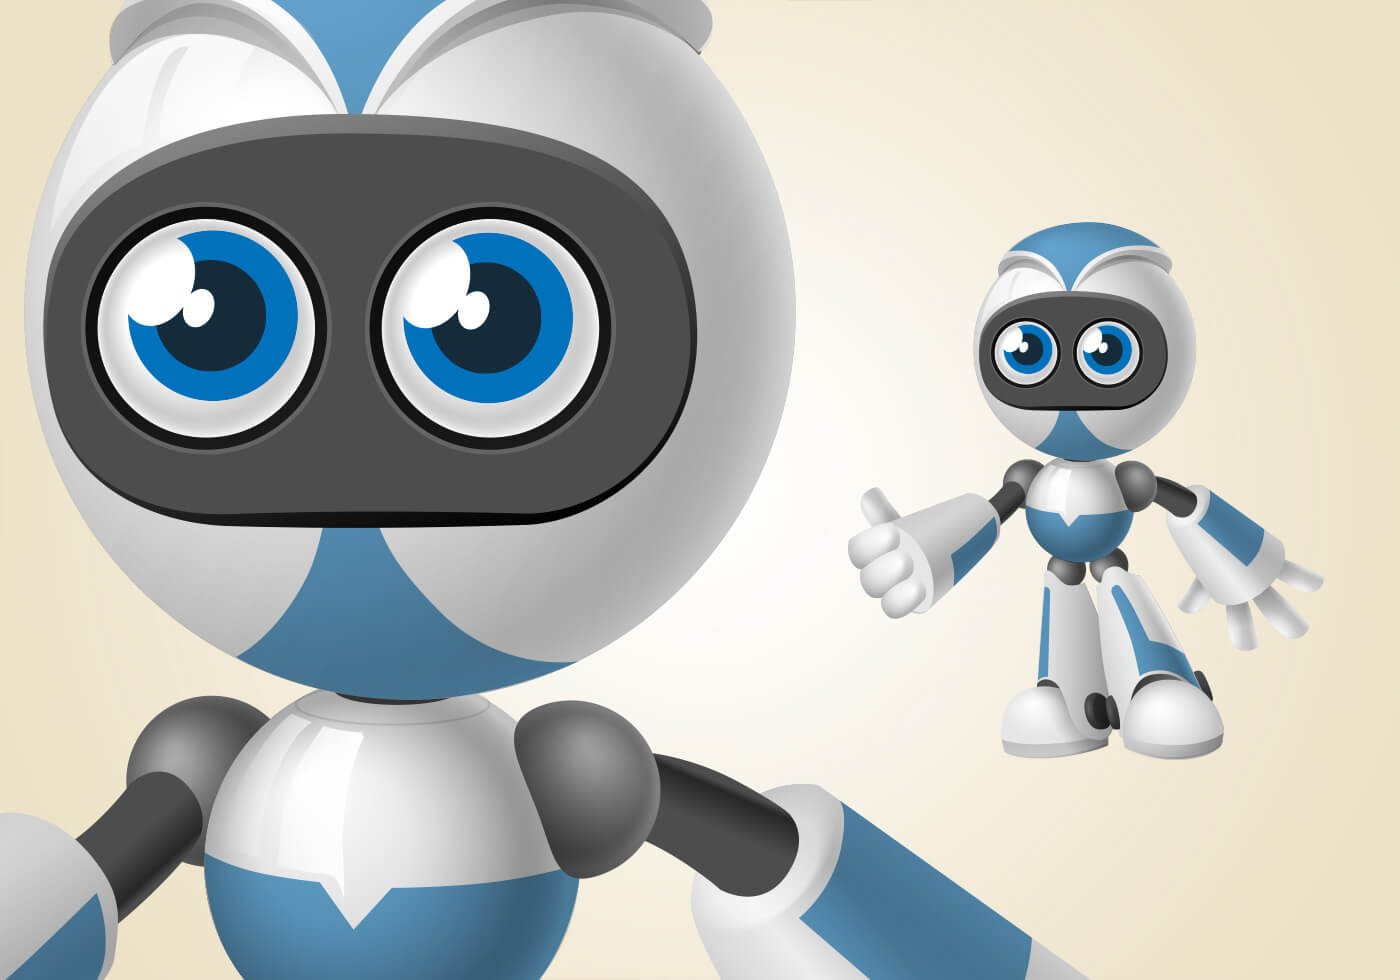 Download Robot Character - Download Free Vector Art, Stock Graphics ...